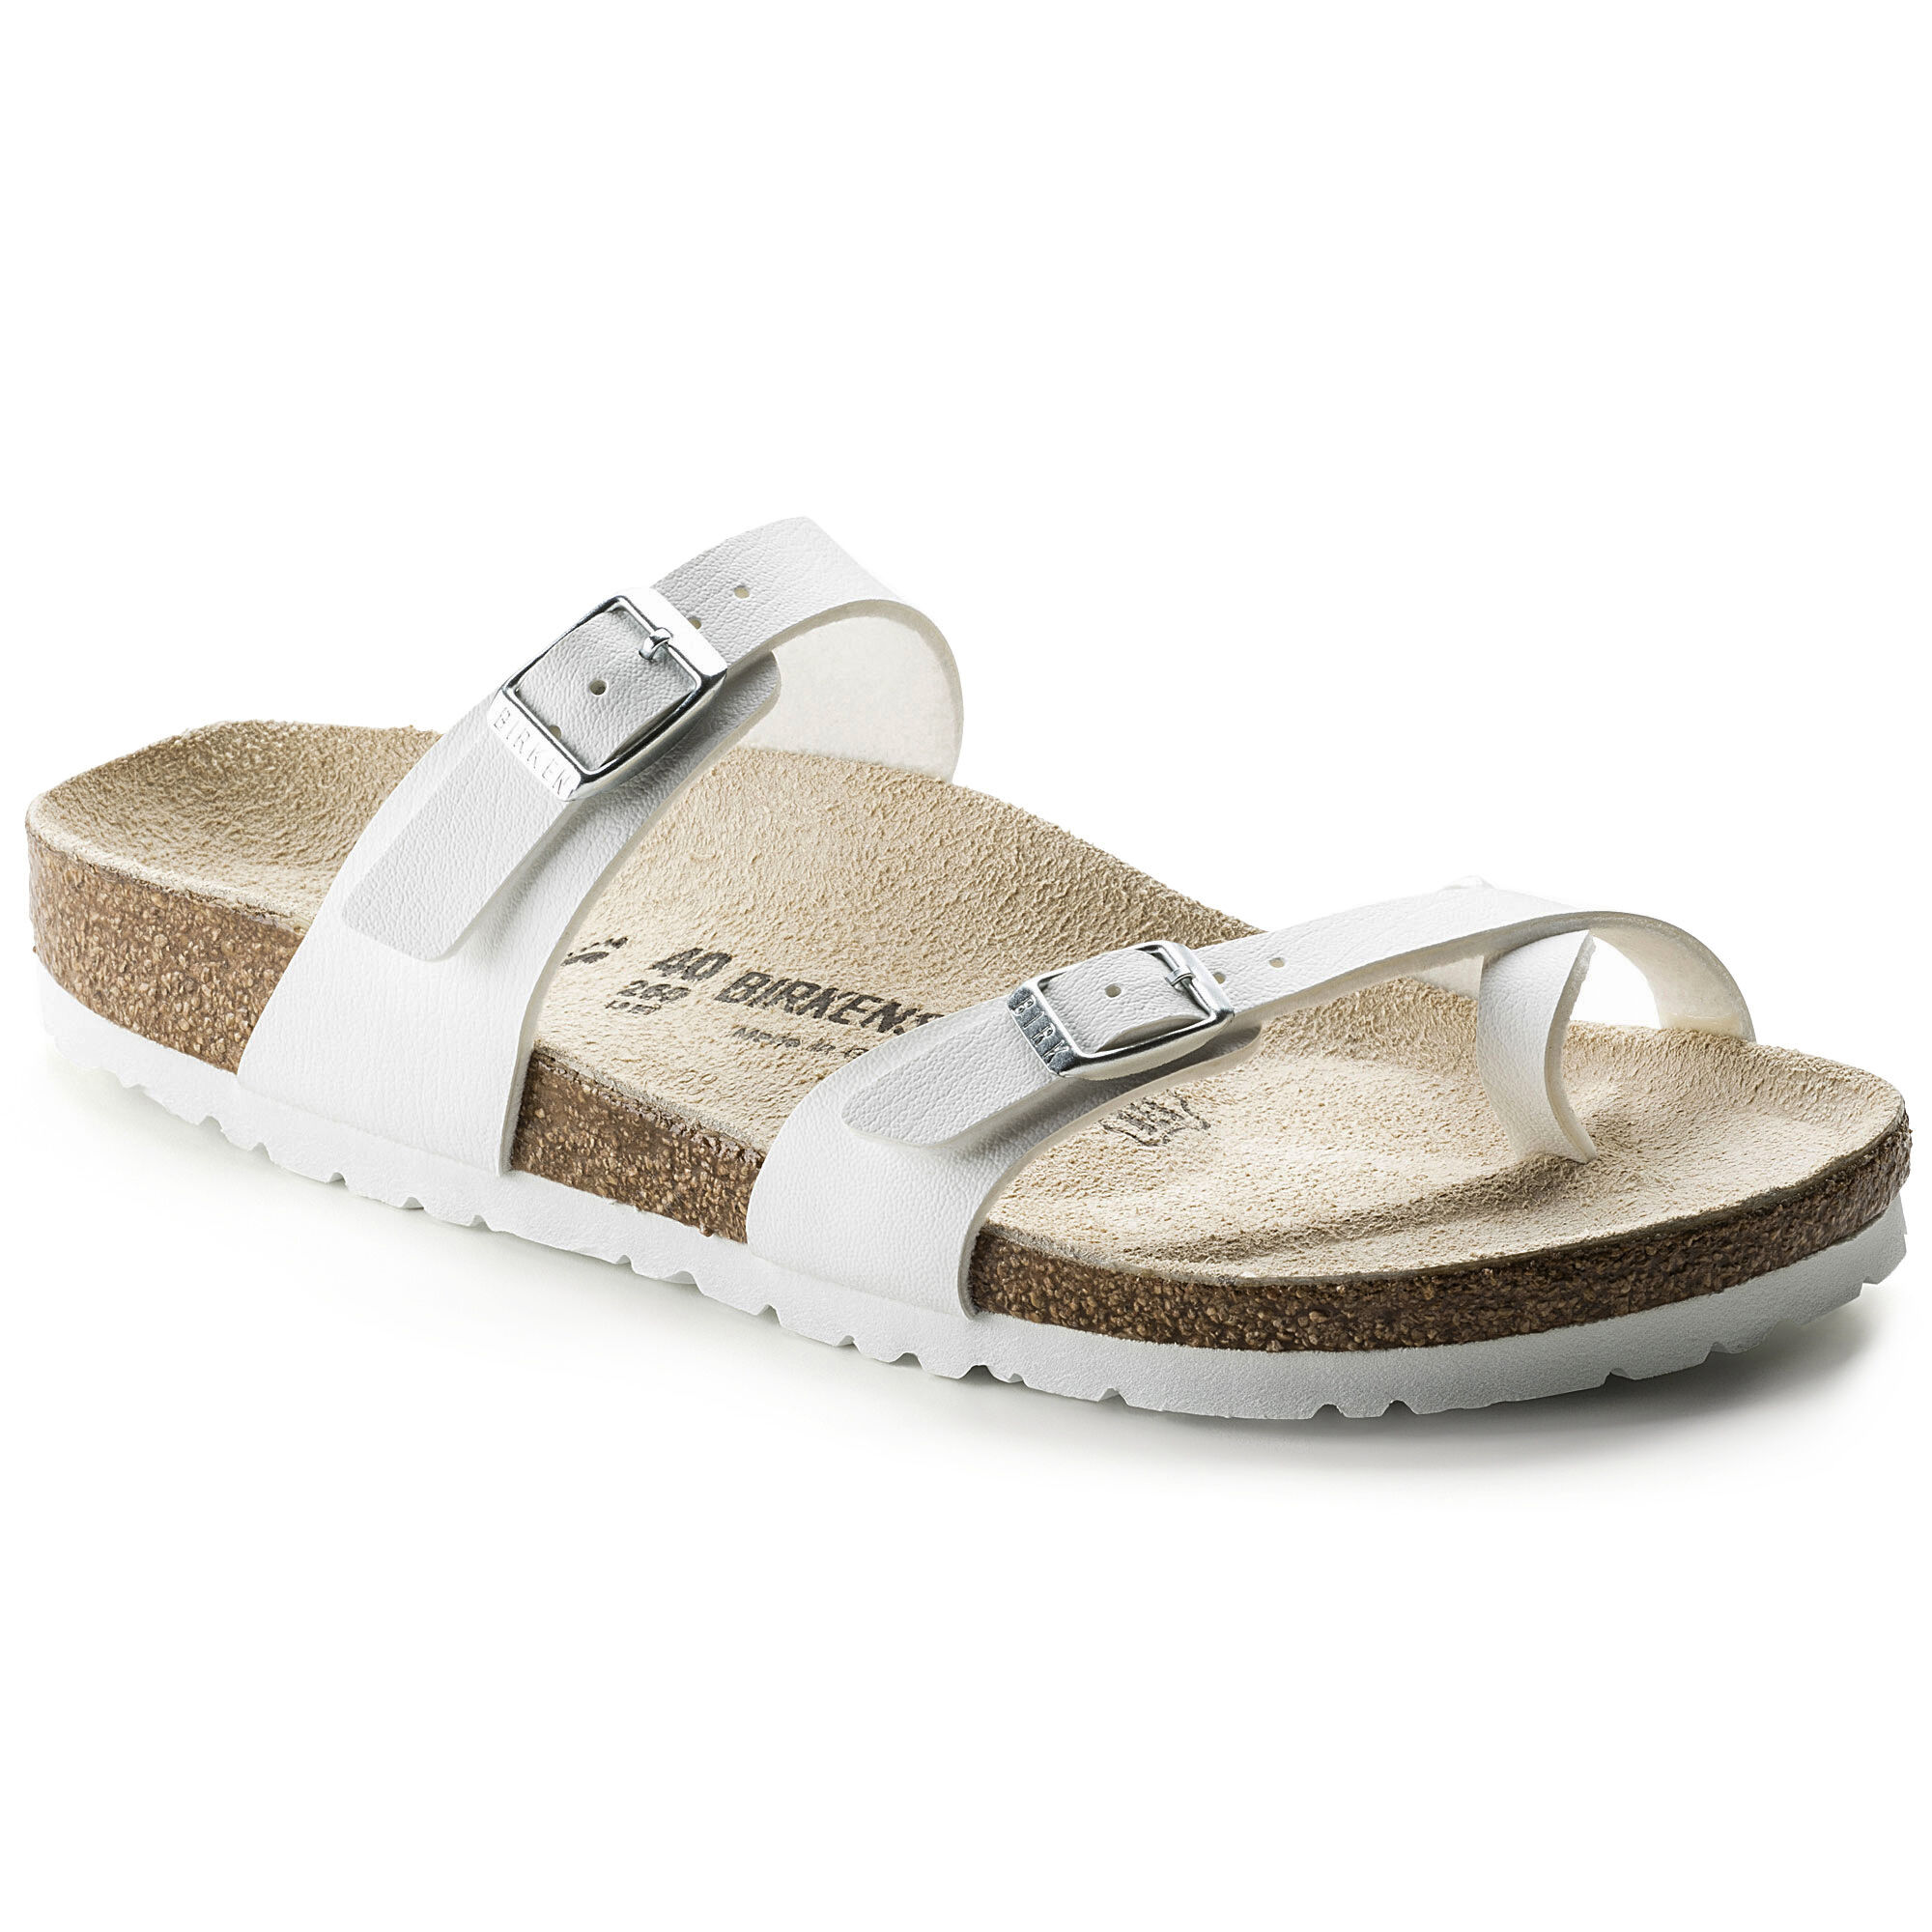 Birkenstock Womens Mayari Sandals Regular Fit - White 2951